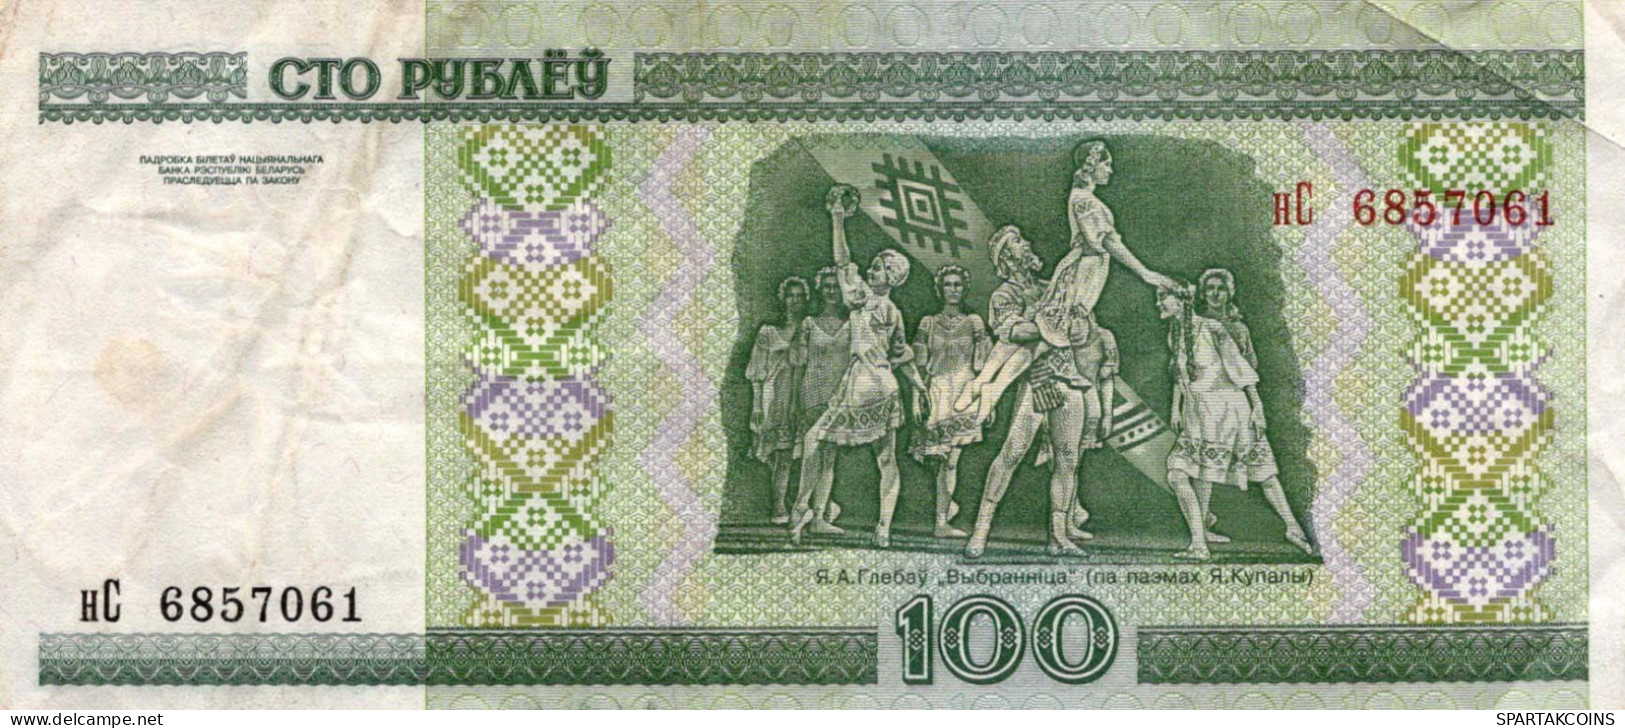 100 RUBLES 2000 BELARUS Papiergeld Banknote #PK611 - [11] Emisiones Locales